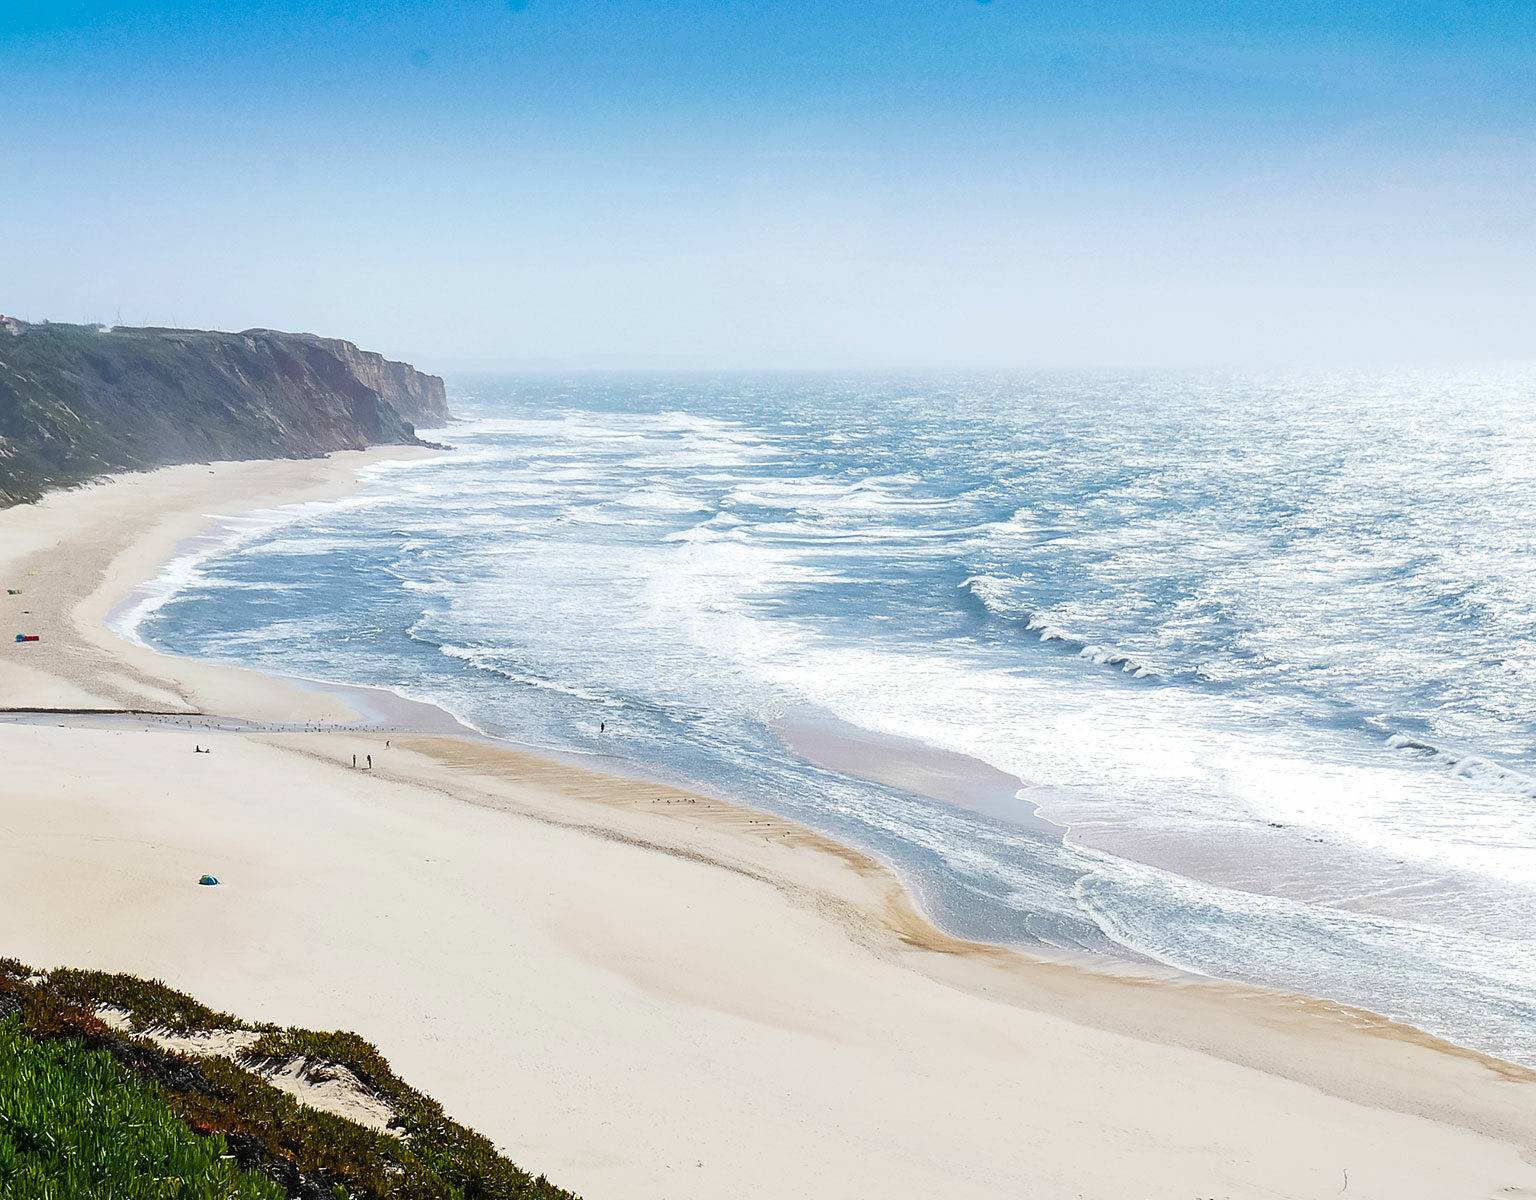 Strand an der Atlantikküste in Portugal mit hohen Wellen lockt Surfer aus aller Welt an.